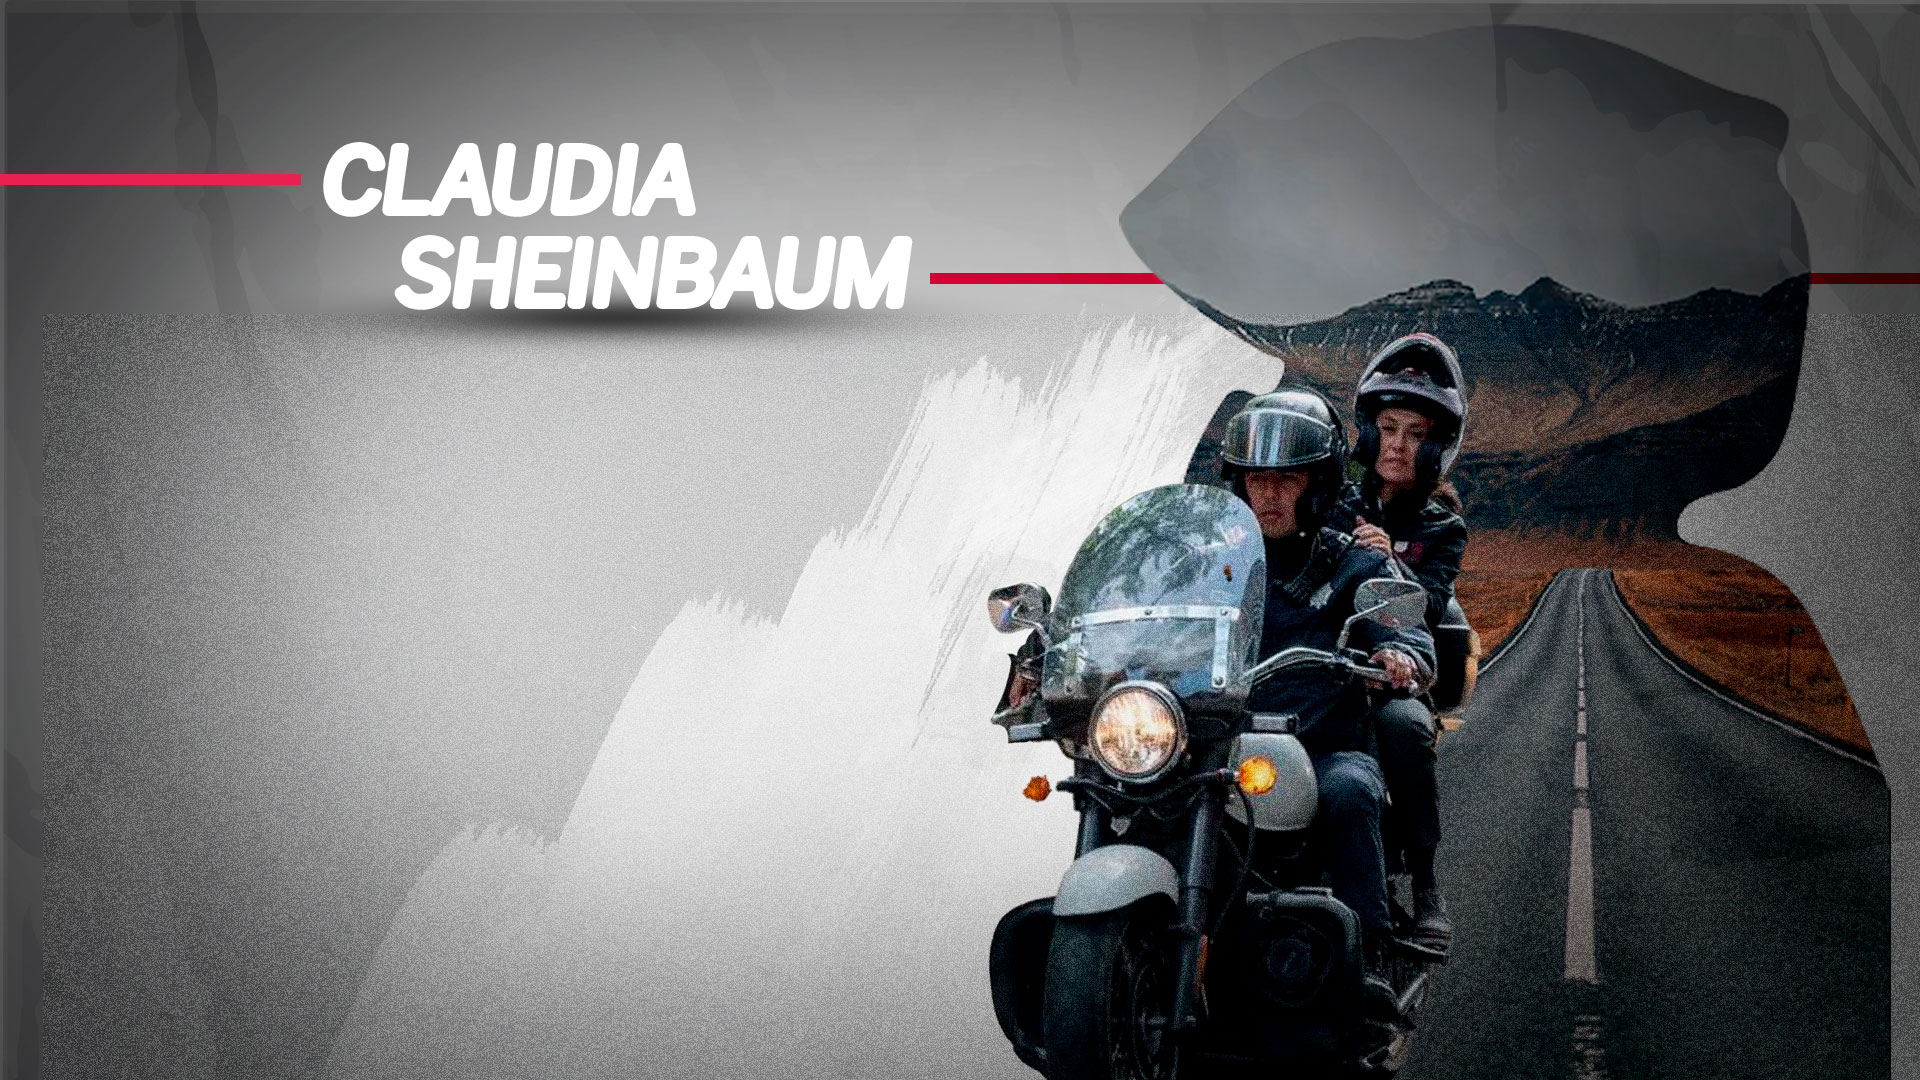 Claudia Sheinbaum recorrió las calles de la CDMX en moto para supervisar un recorrido (Imagen: Infobae México)